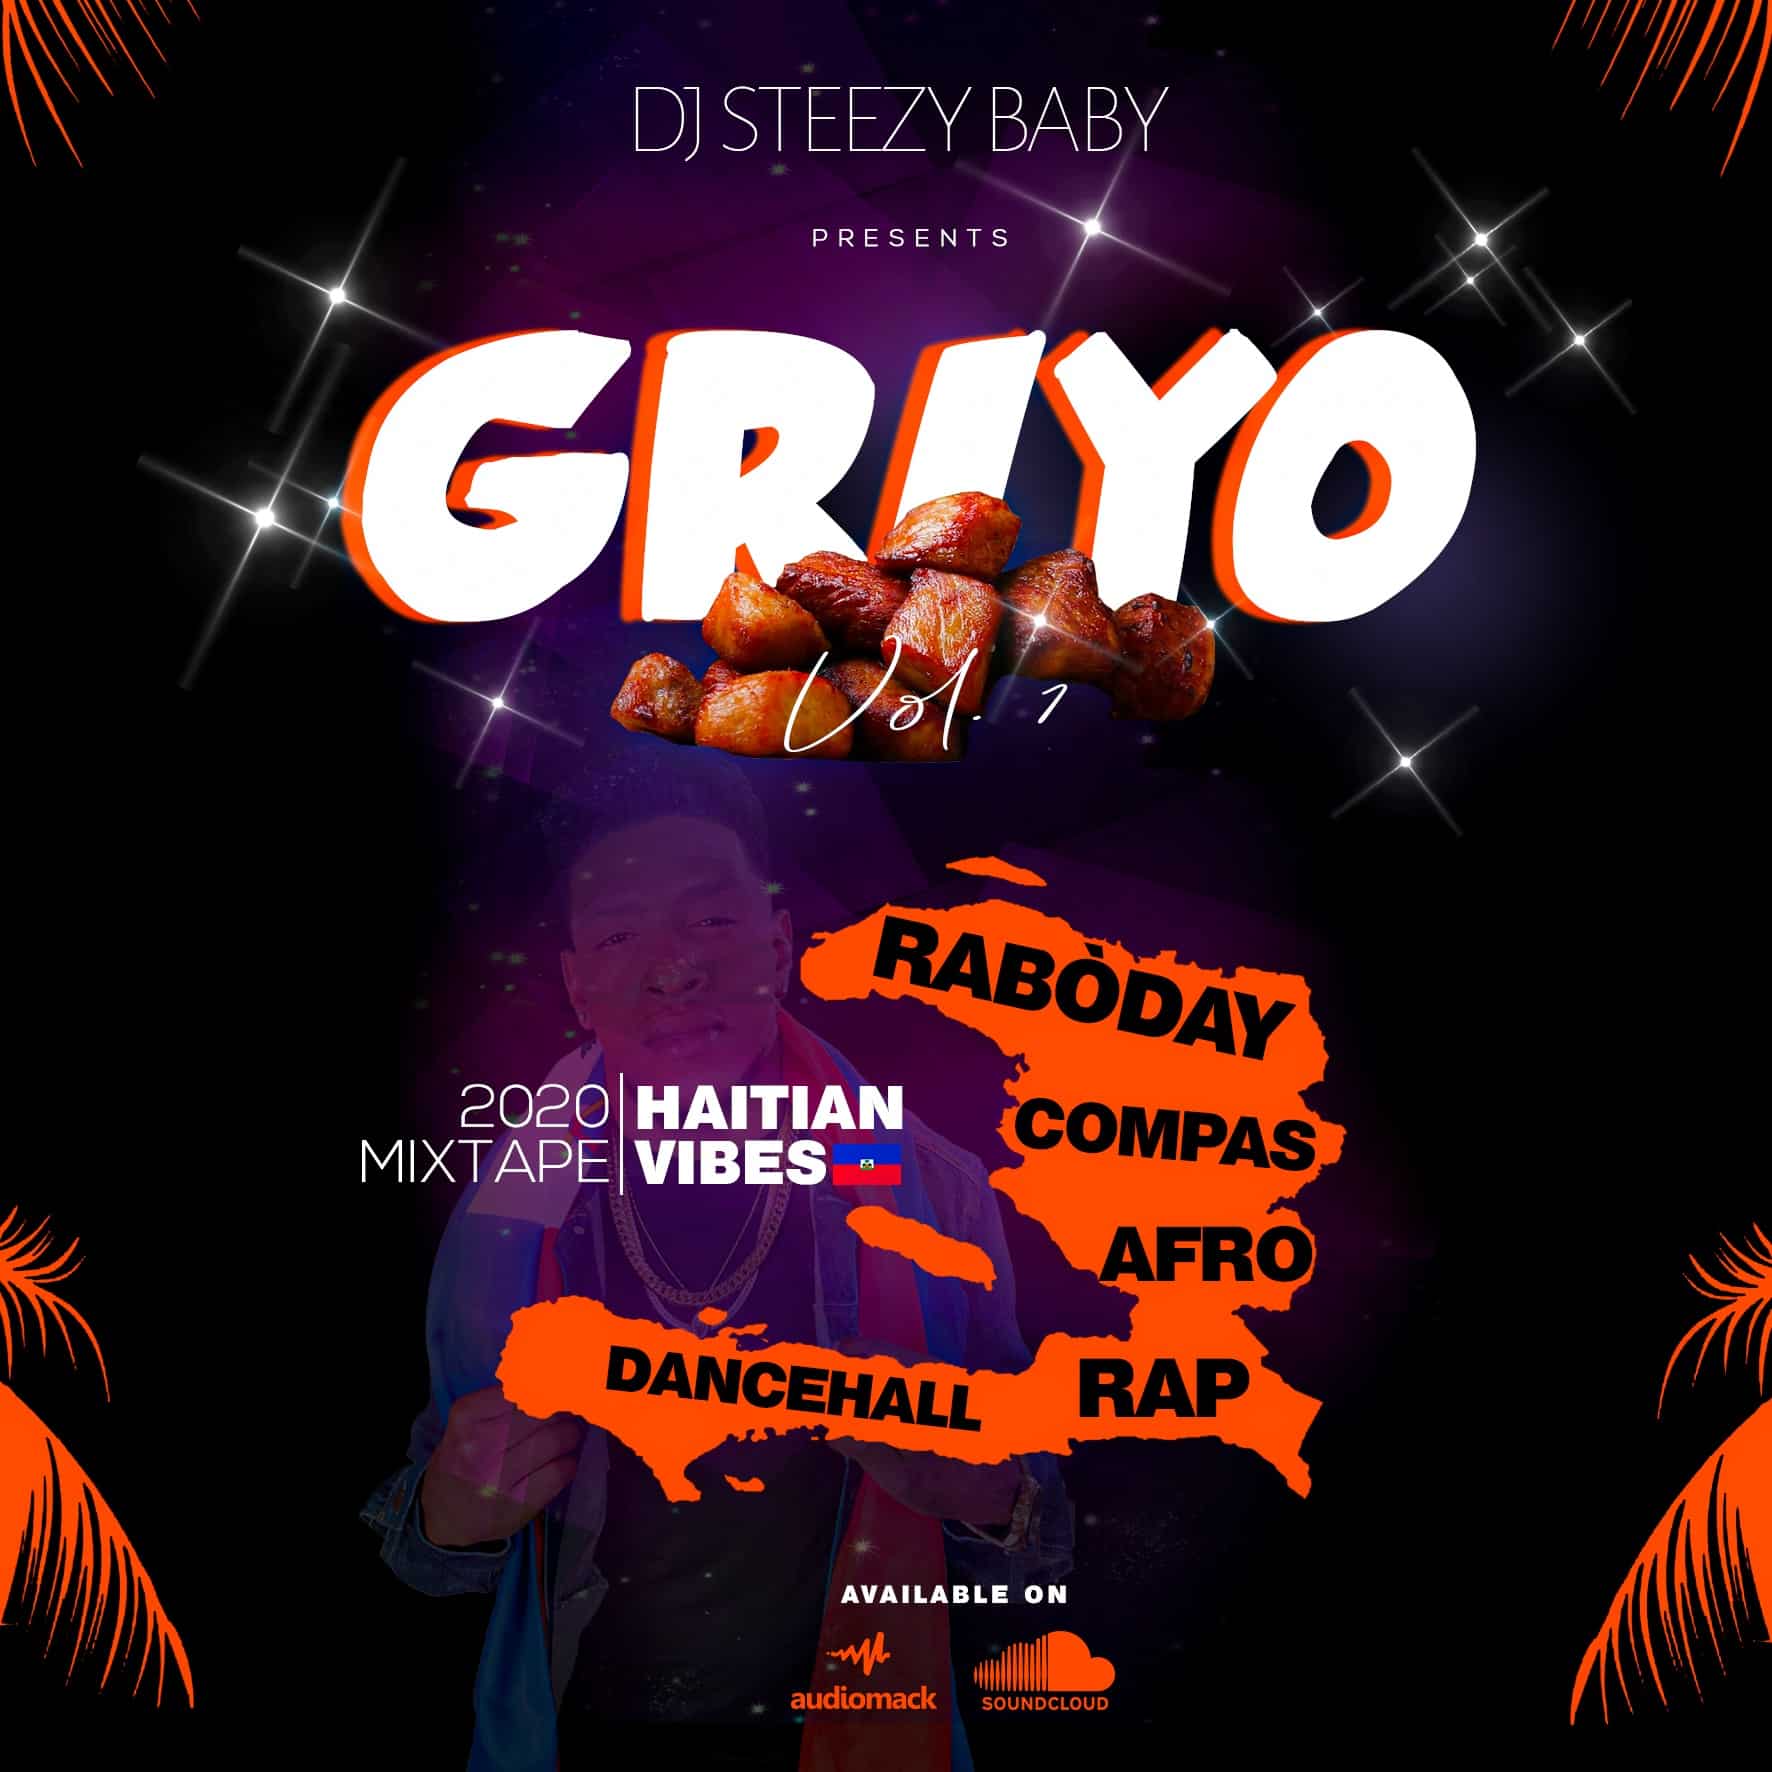 DJ STEEZY GRIYO VOL 1 COMPAS AFRO RABODAY DANCEHALL ›